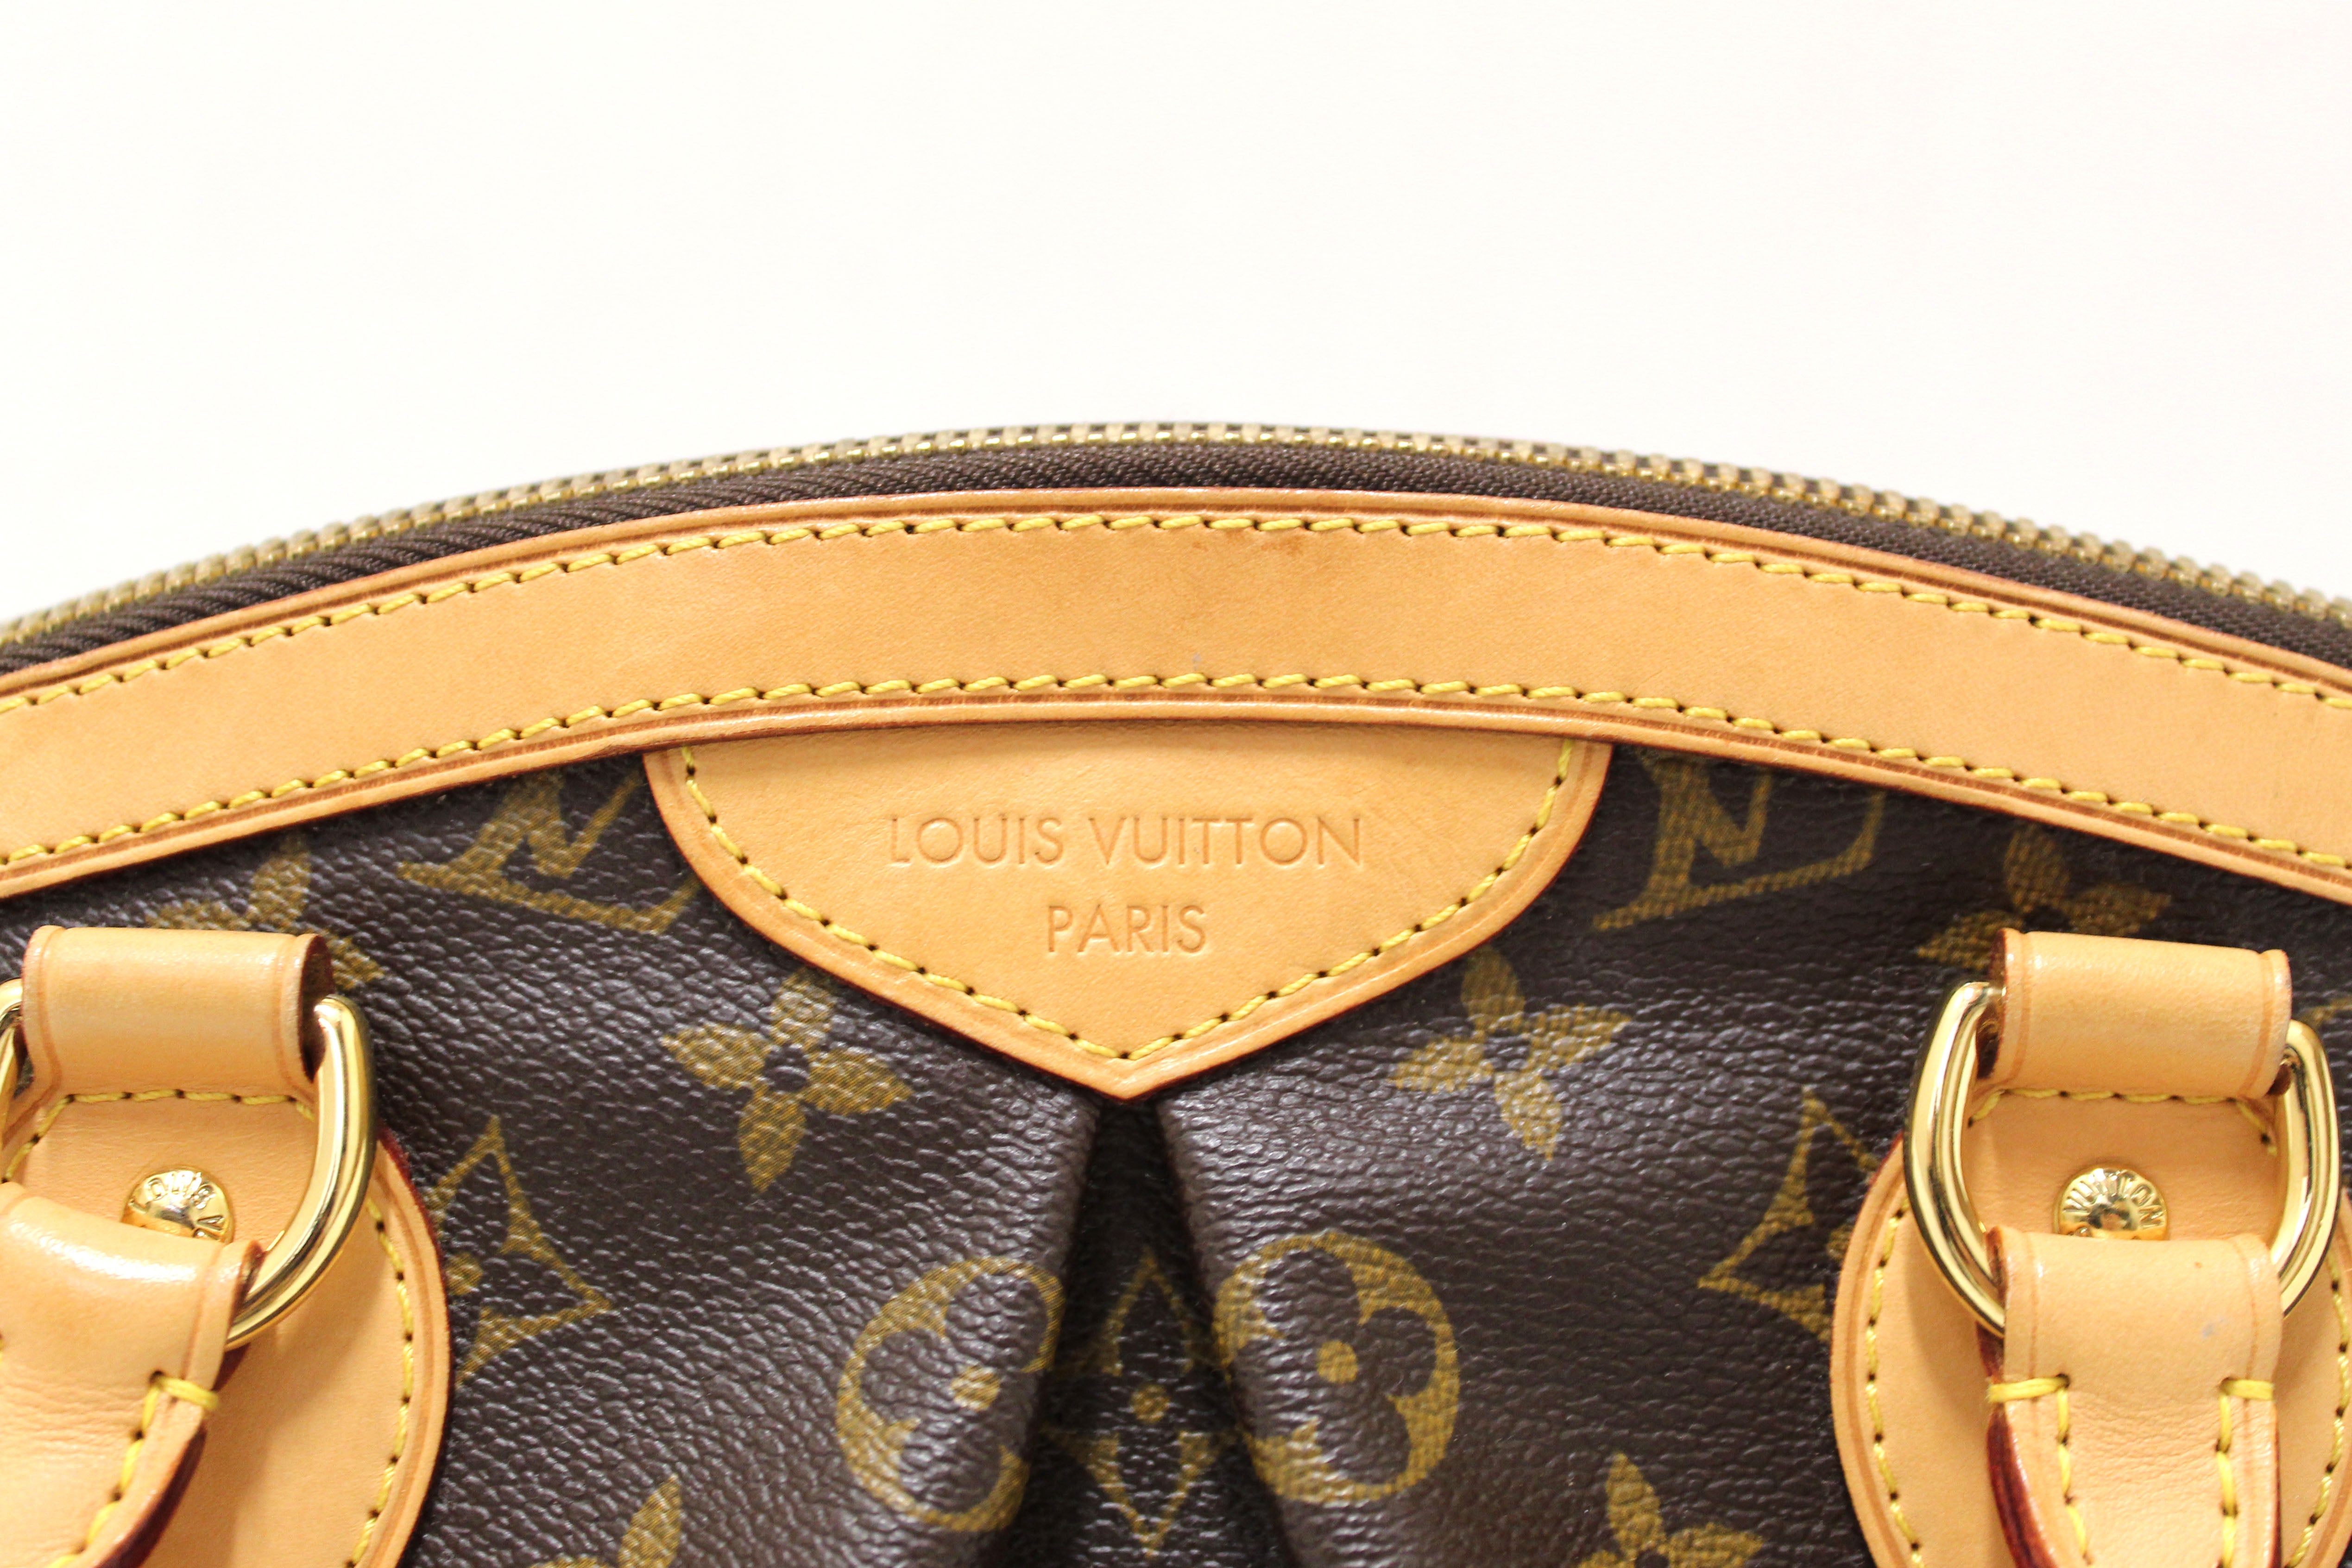 Authentic Louis Vuitton Classic Monogram Canvas Tivoli PM Handbag